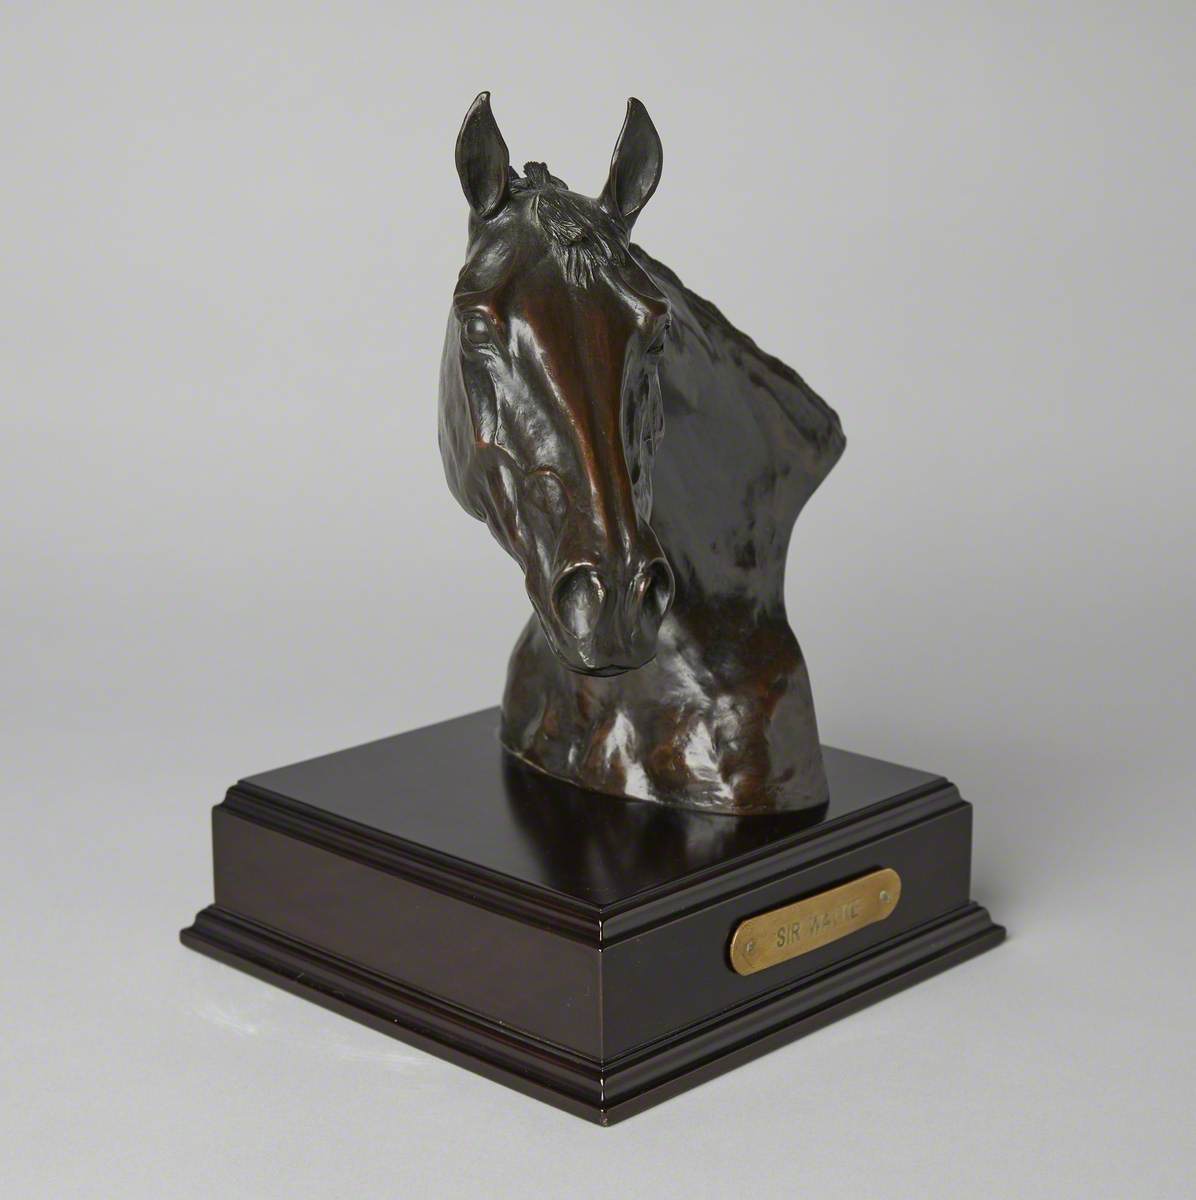 Bust of Sir Wattie, the Scott Family Racehorse